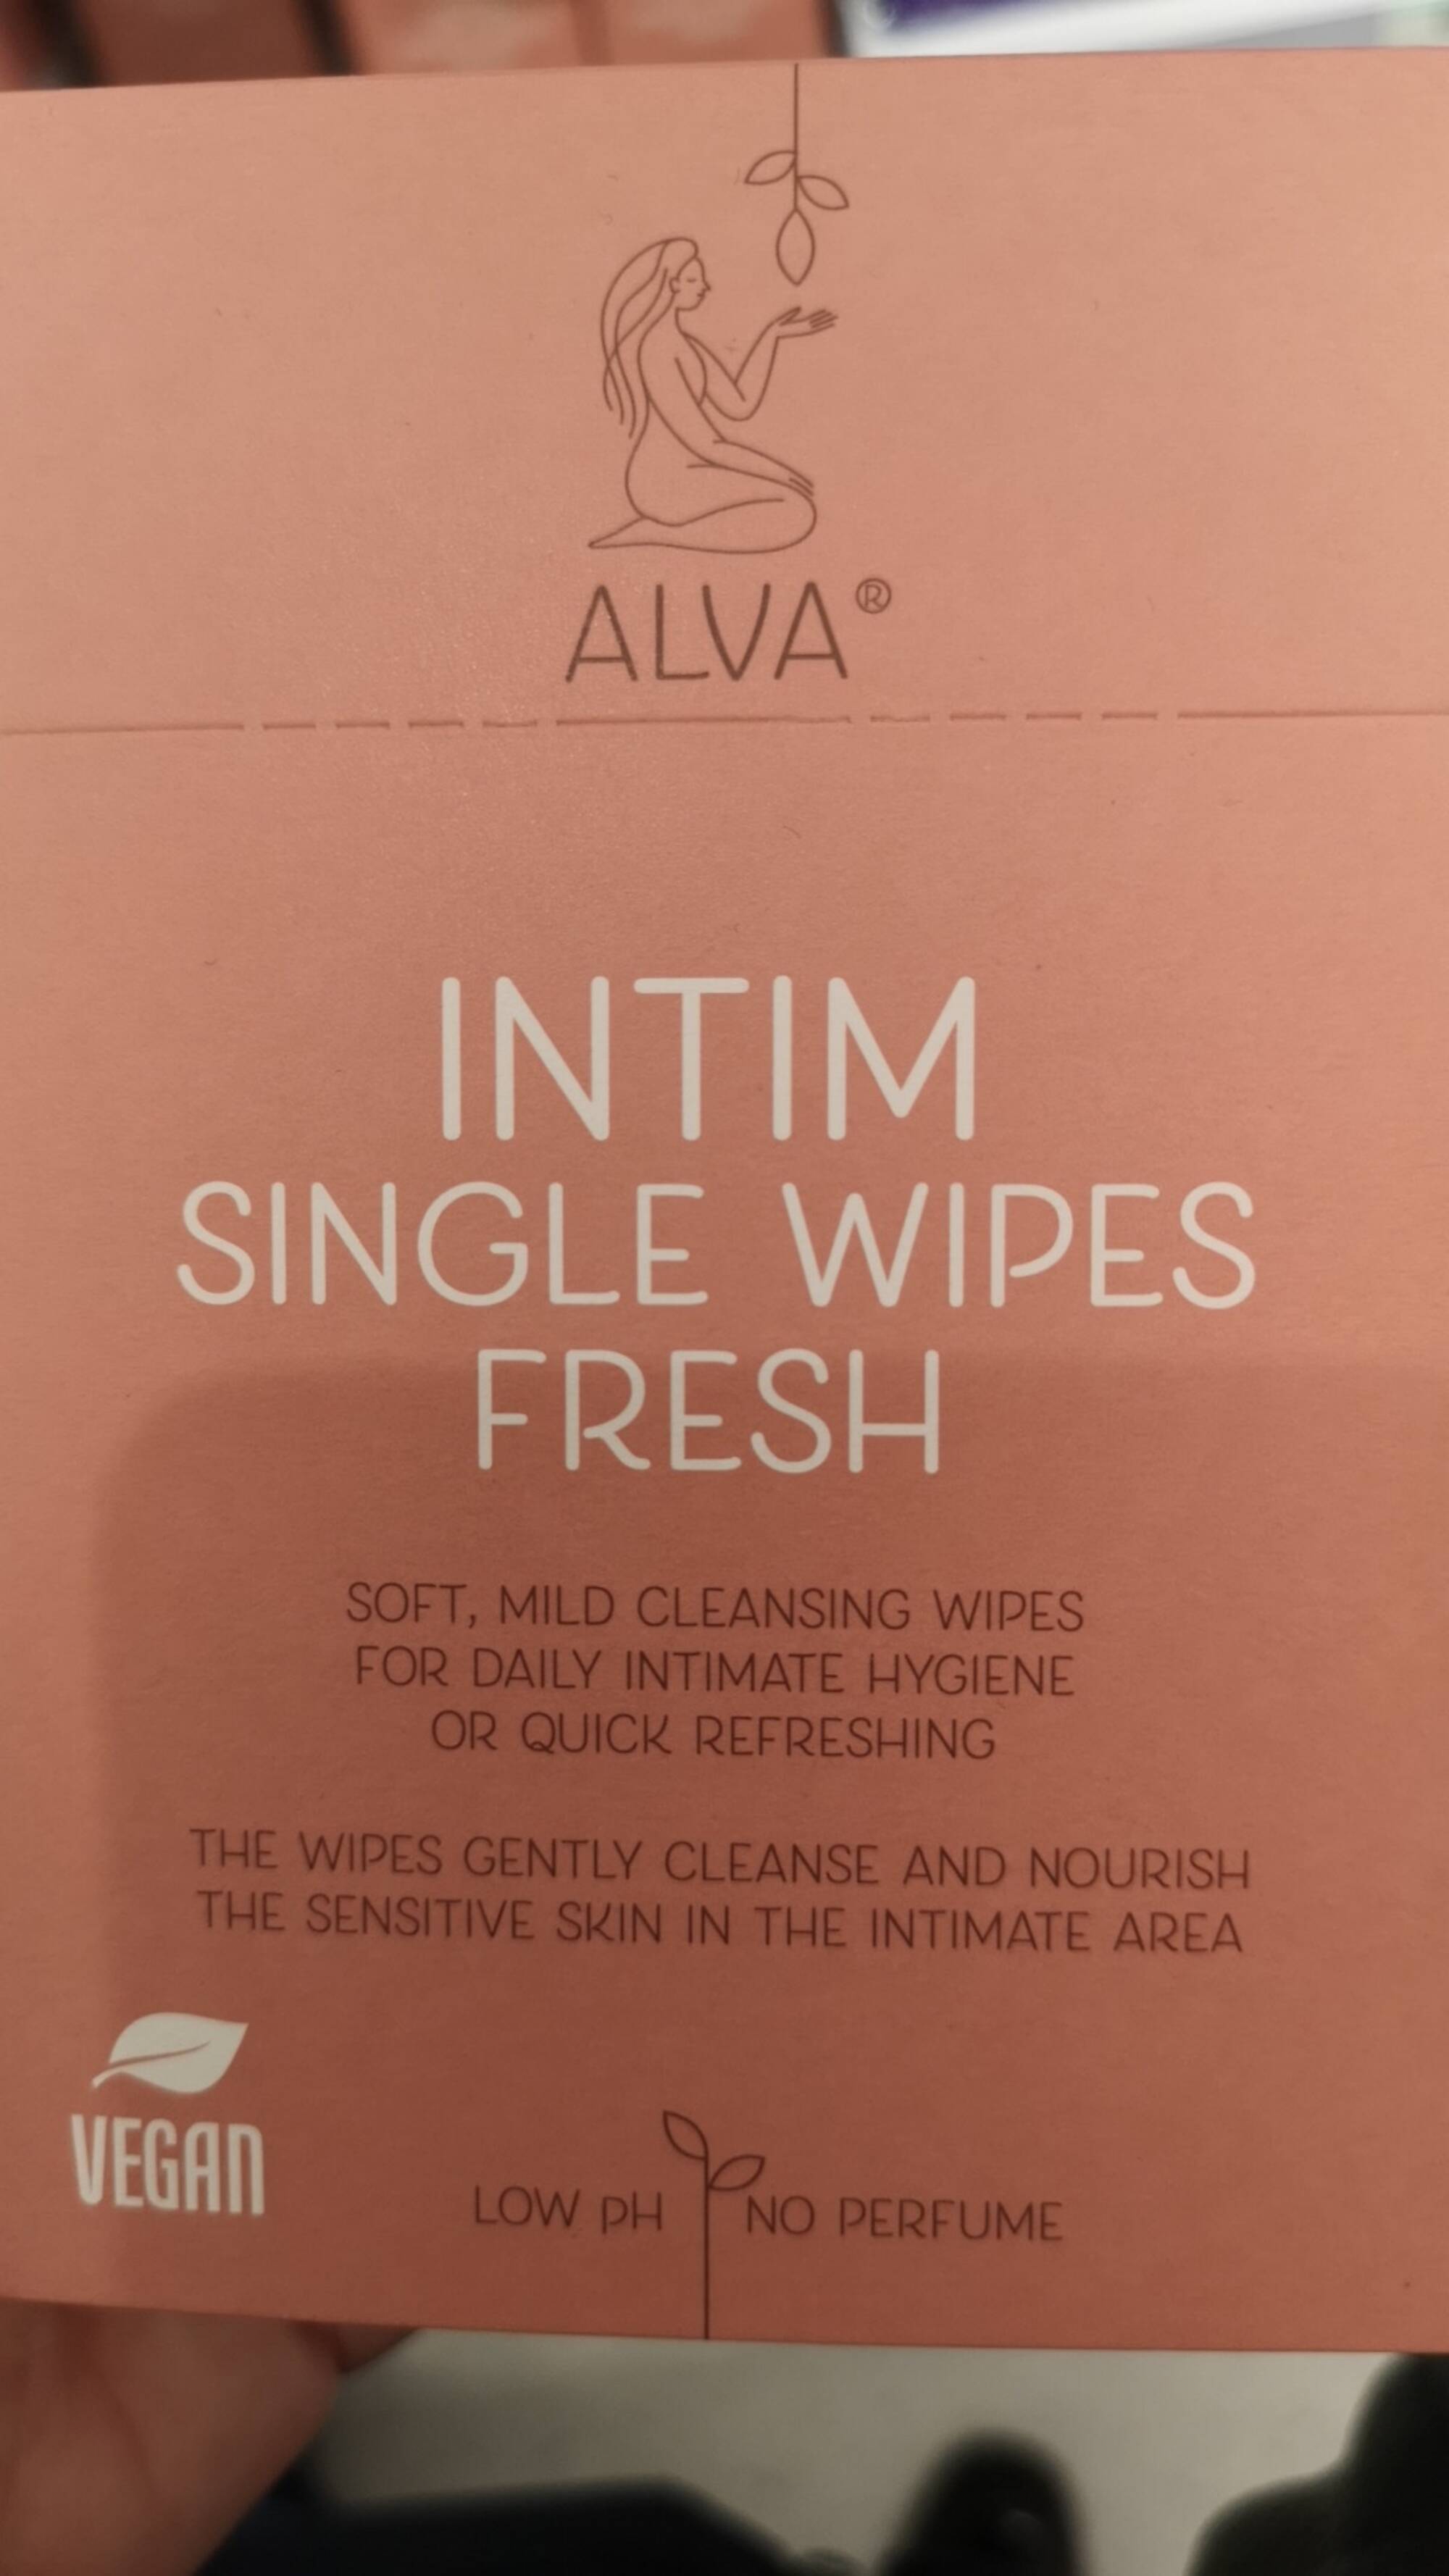 ALVA - Intim single wipes fresh